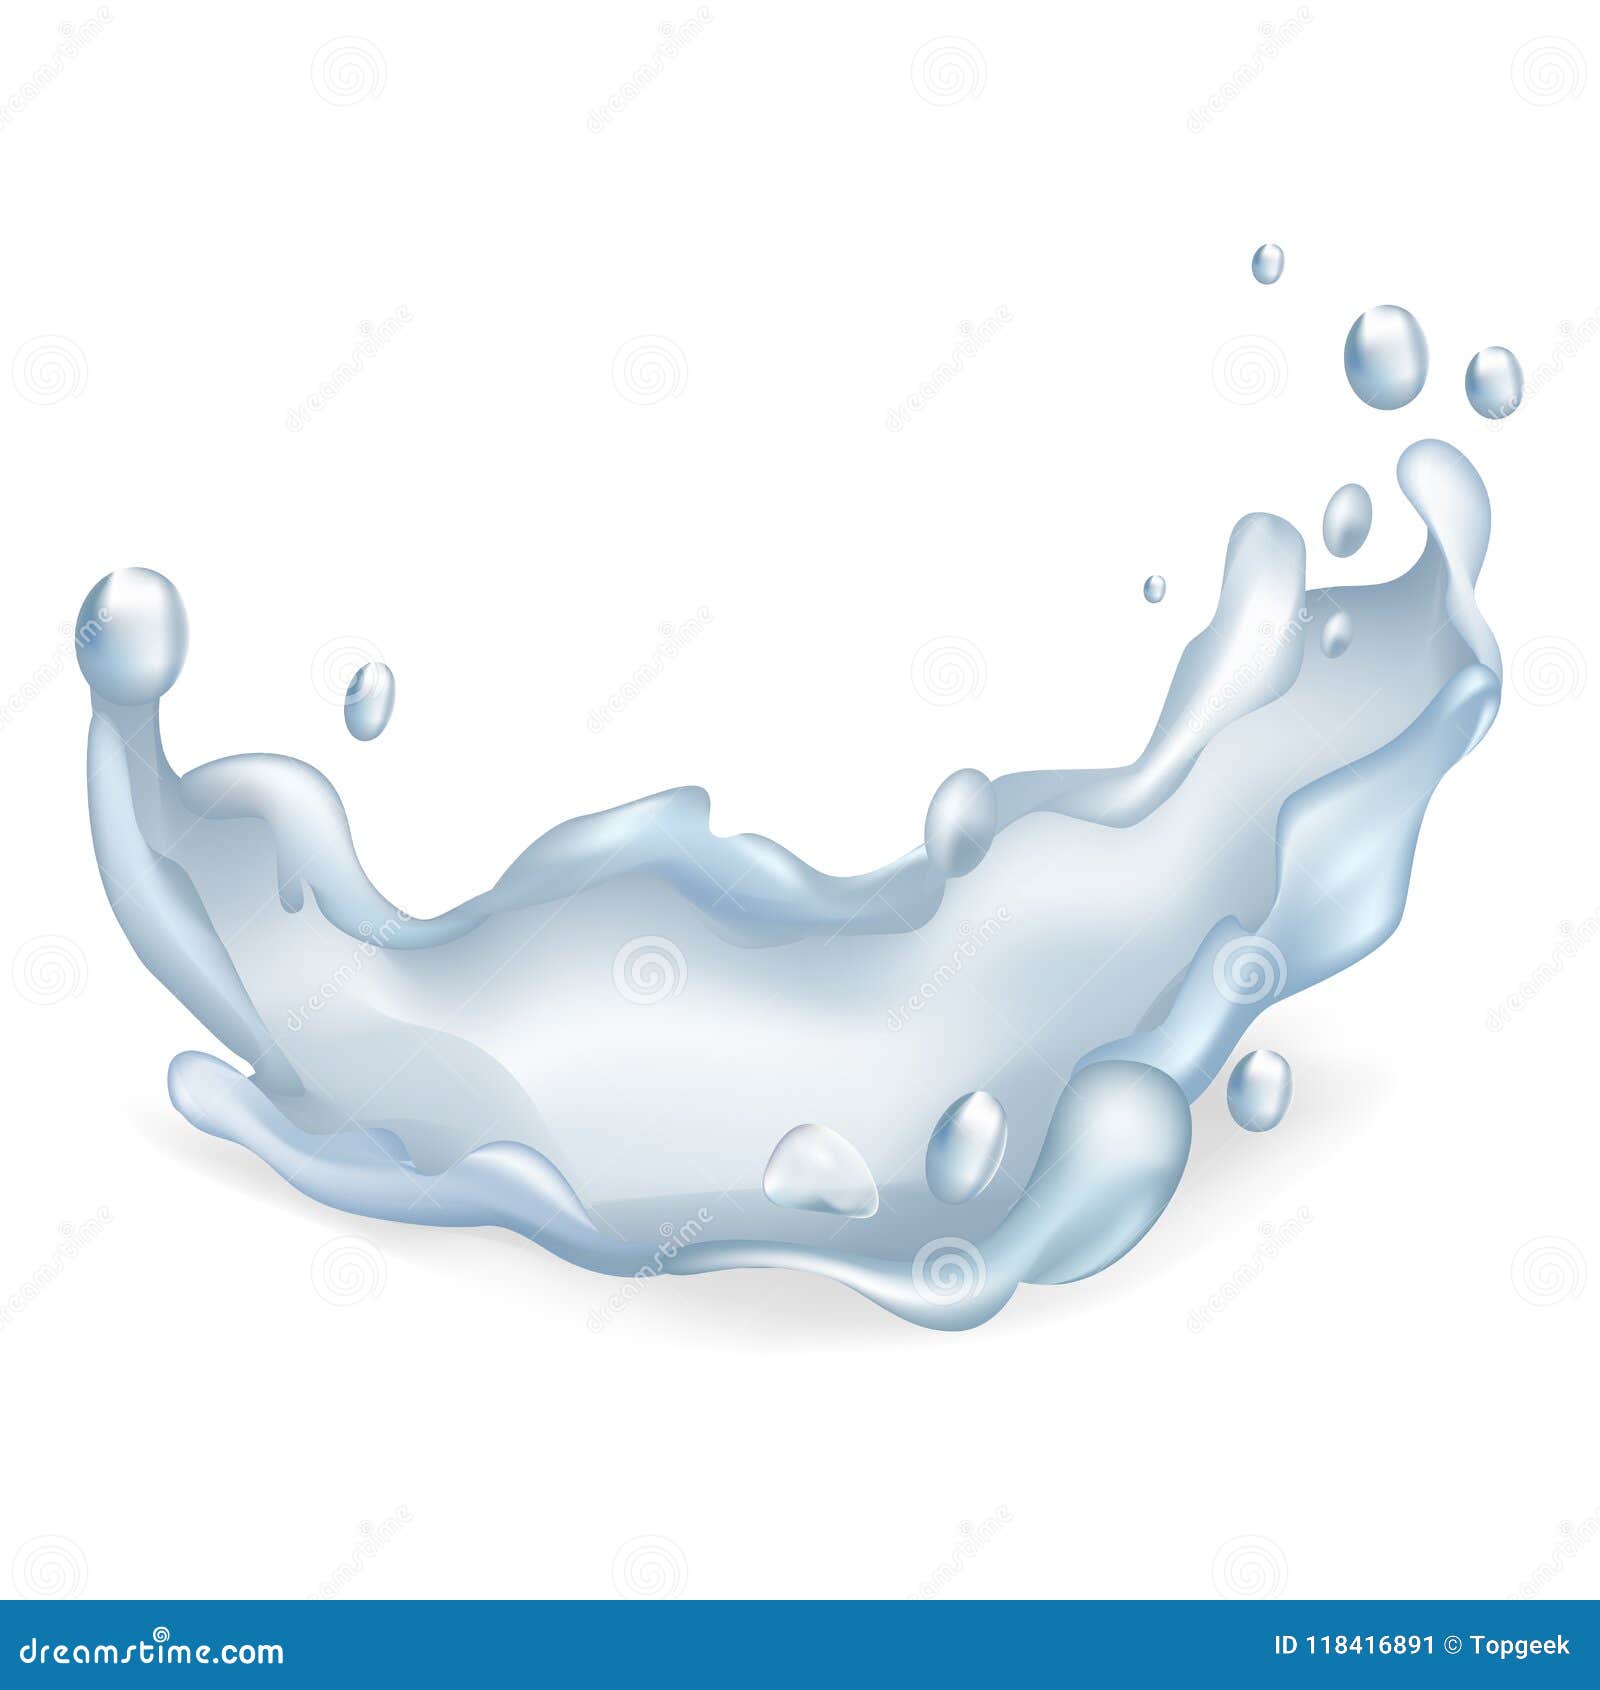 splash of liquid with droplets on transparent